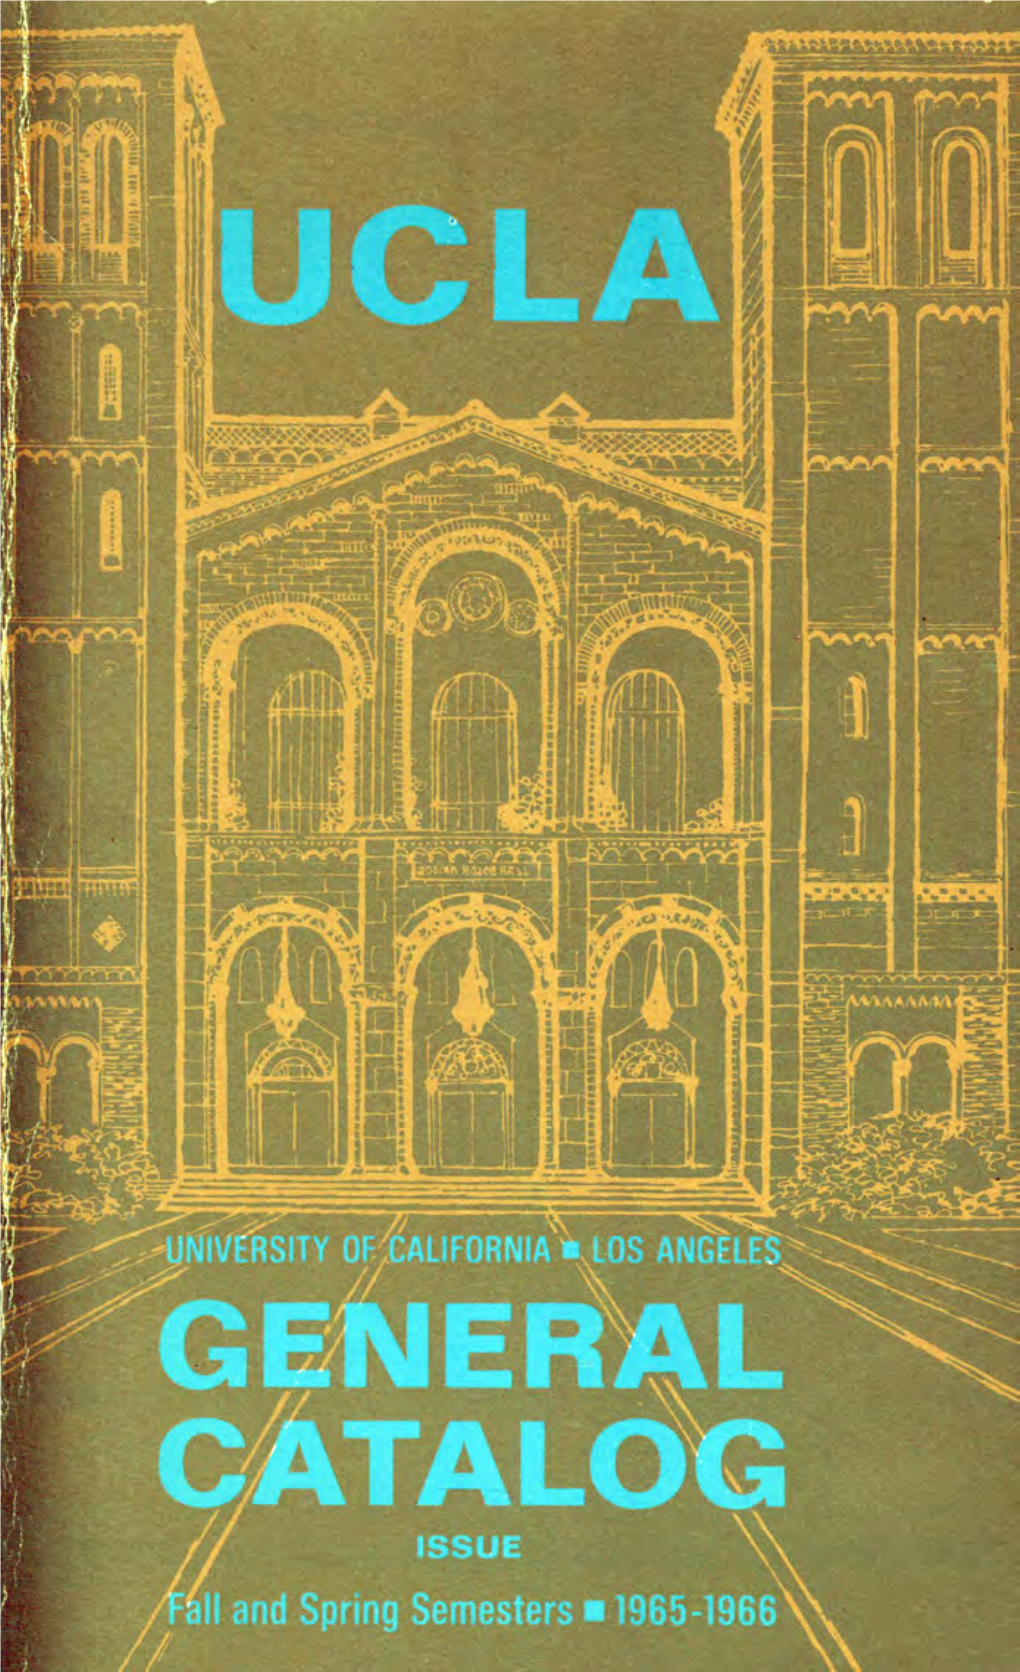 UCLA General Catalog 1965-66